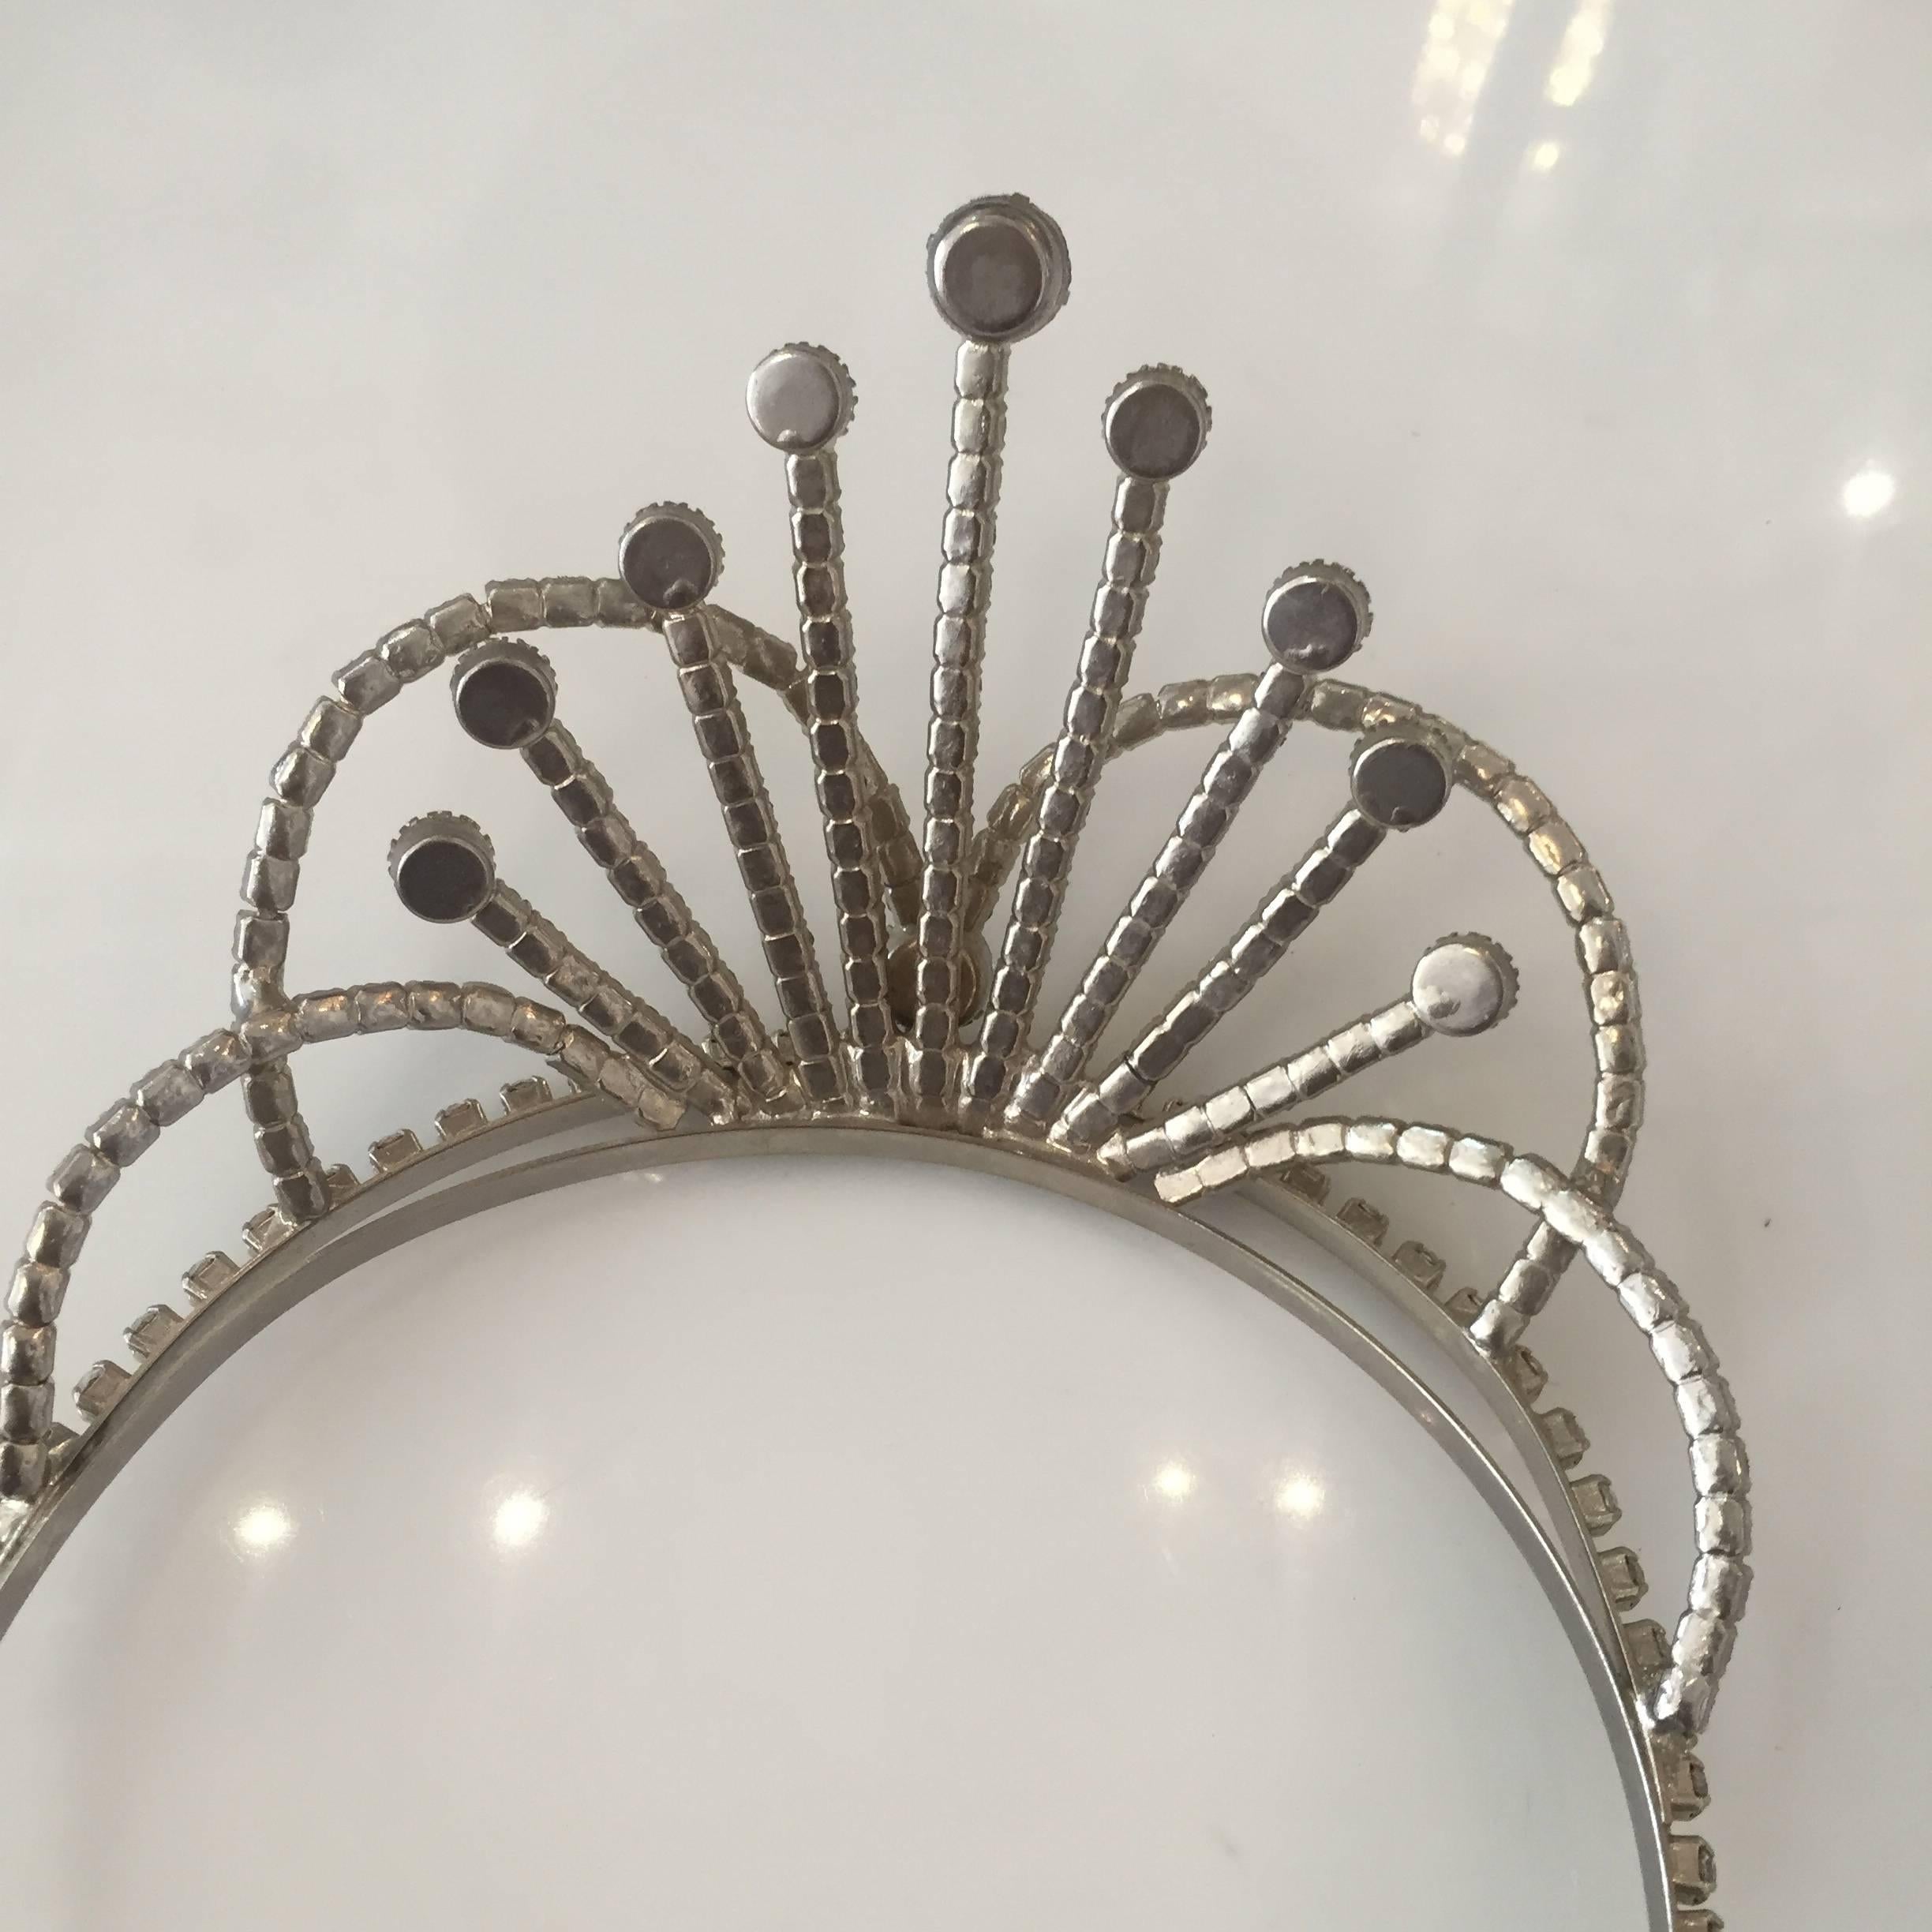 Stainless Steel Rhinestone Tiara Wedding Crown, circa 1950